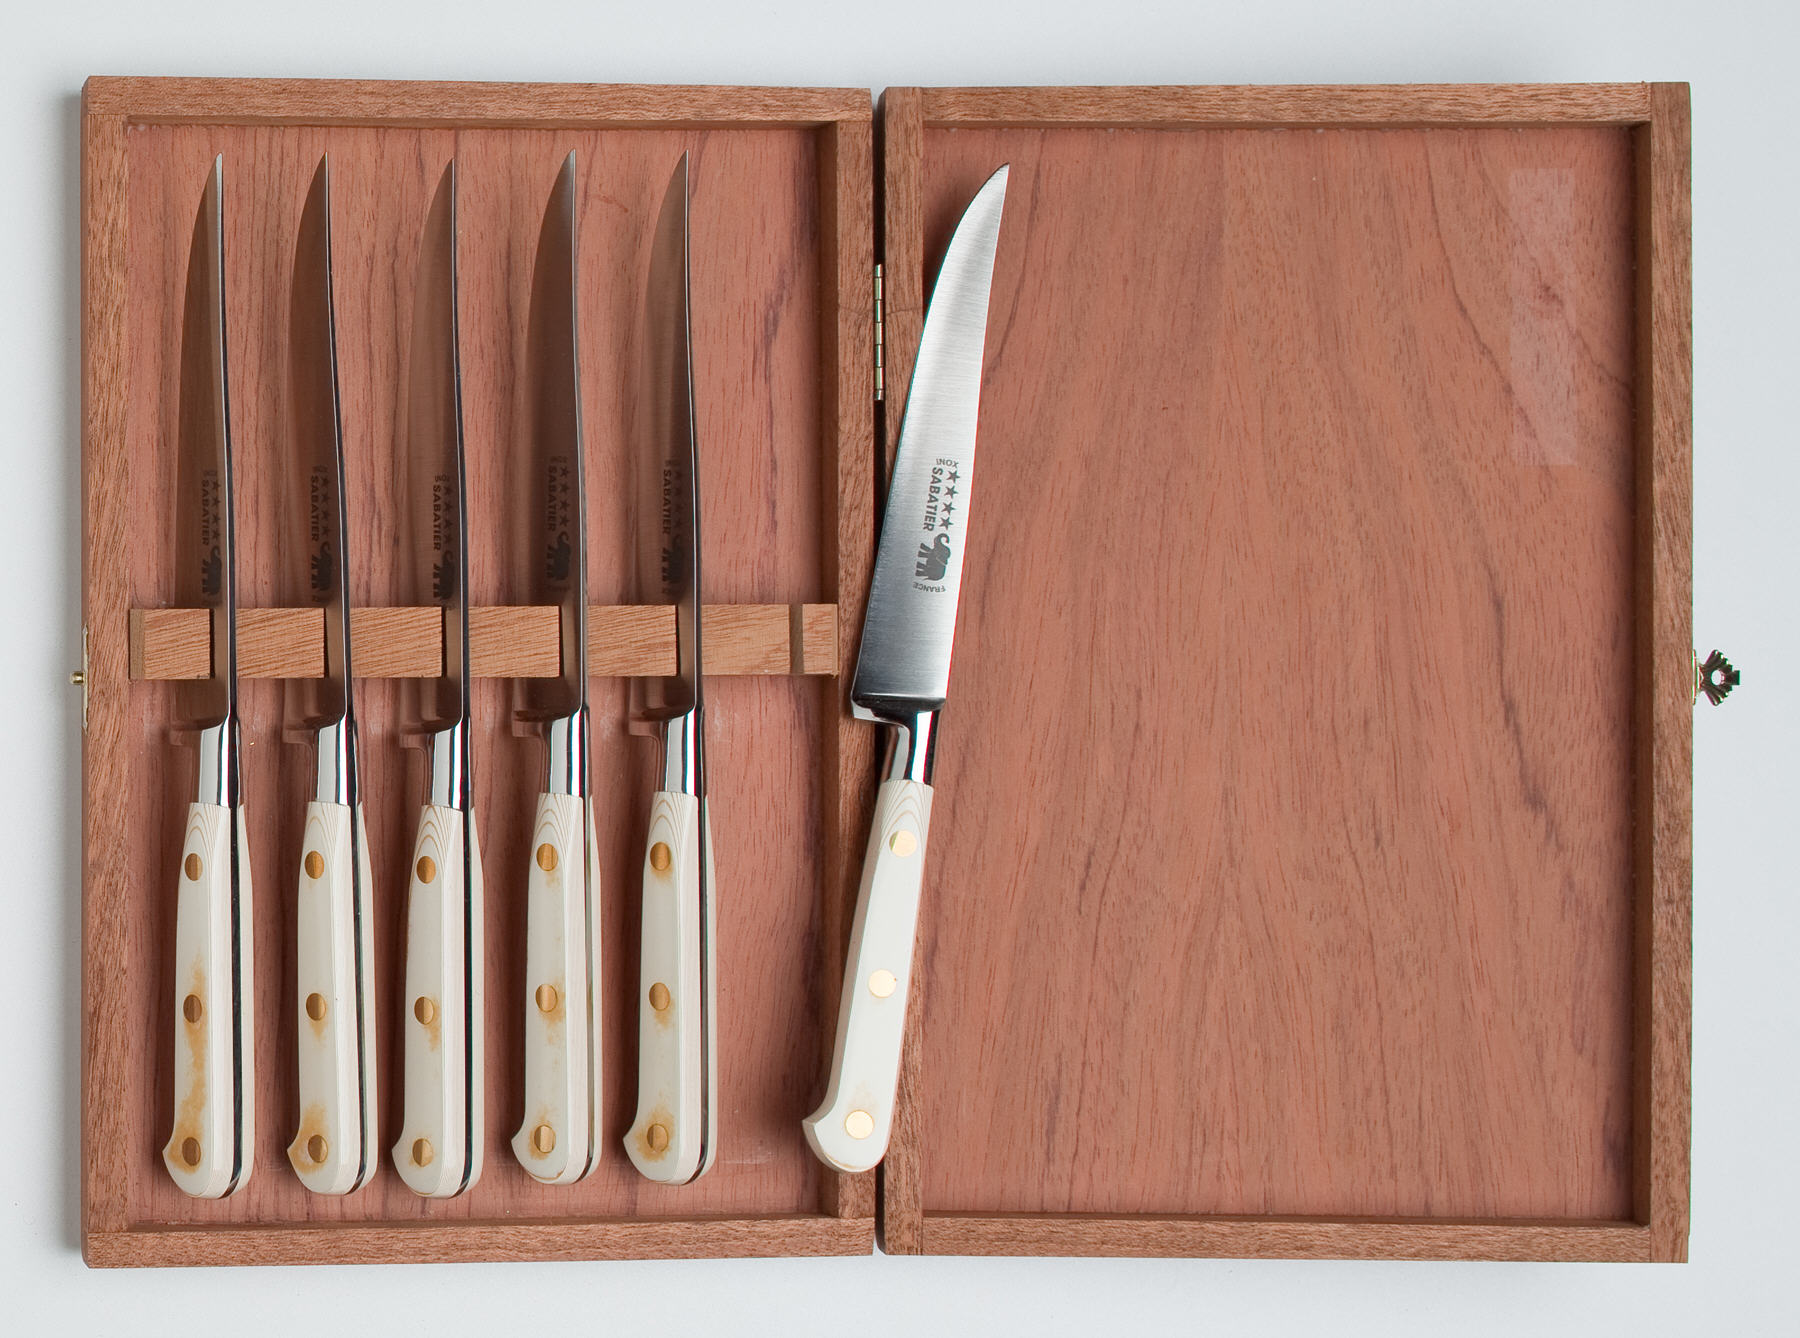 UMOGI High-end Steak Knives Set of 6, Gift Box - Black Natural